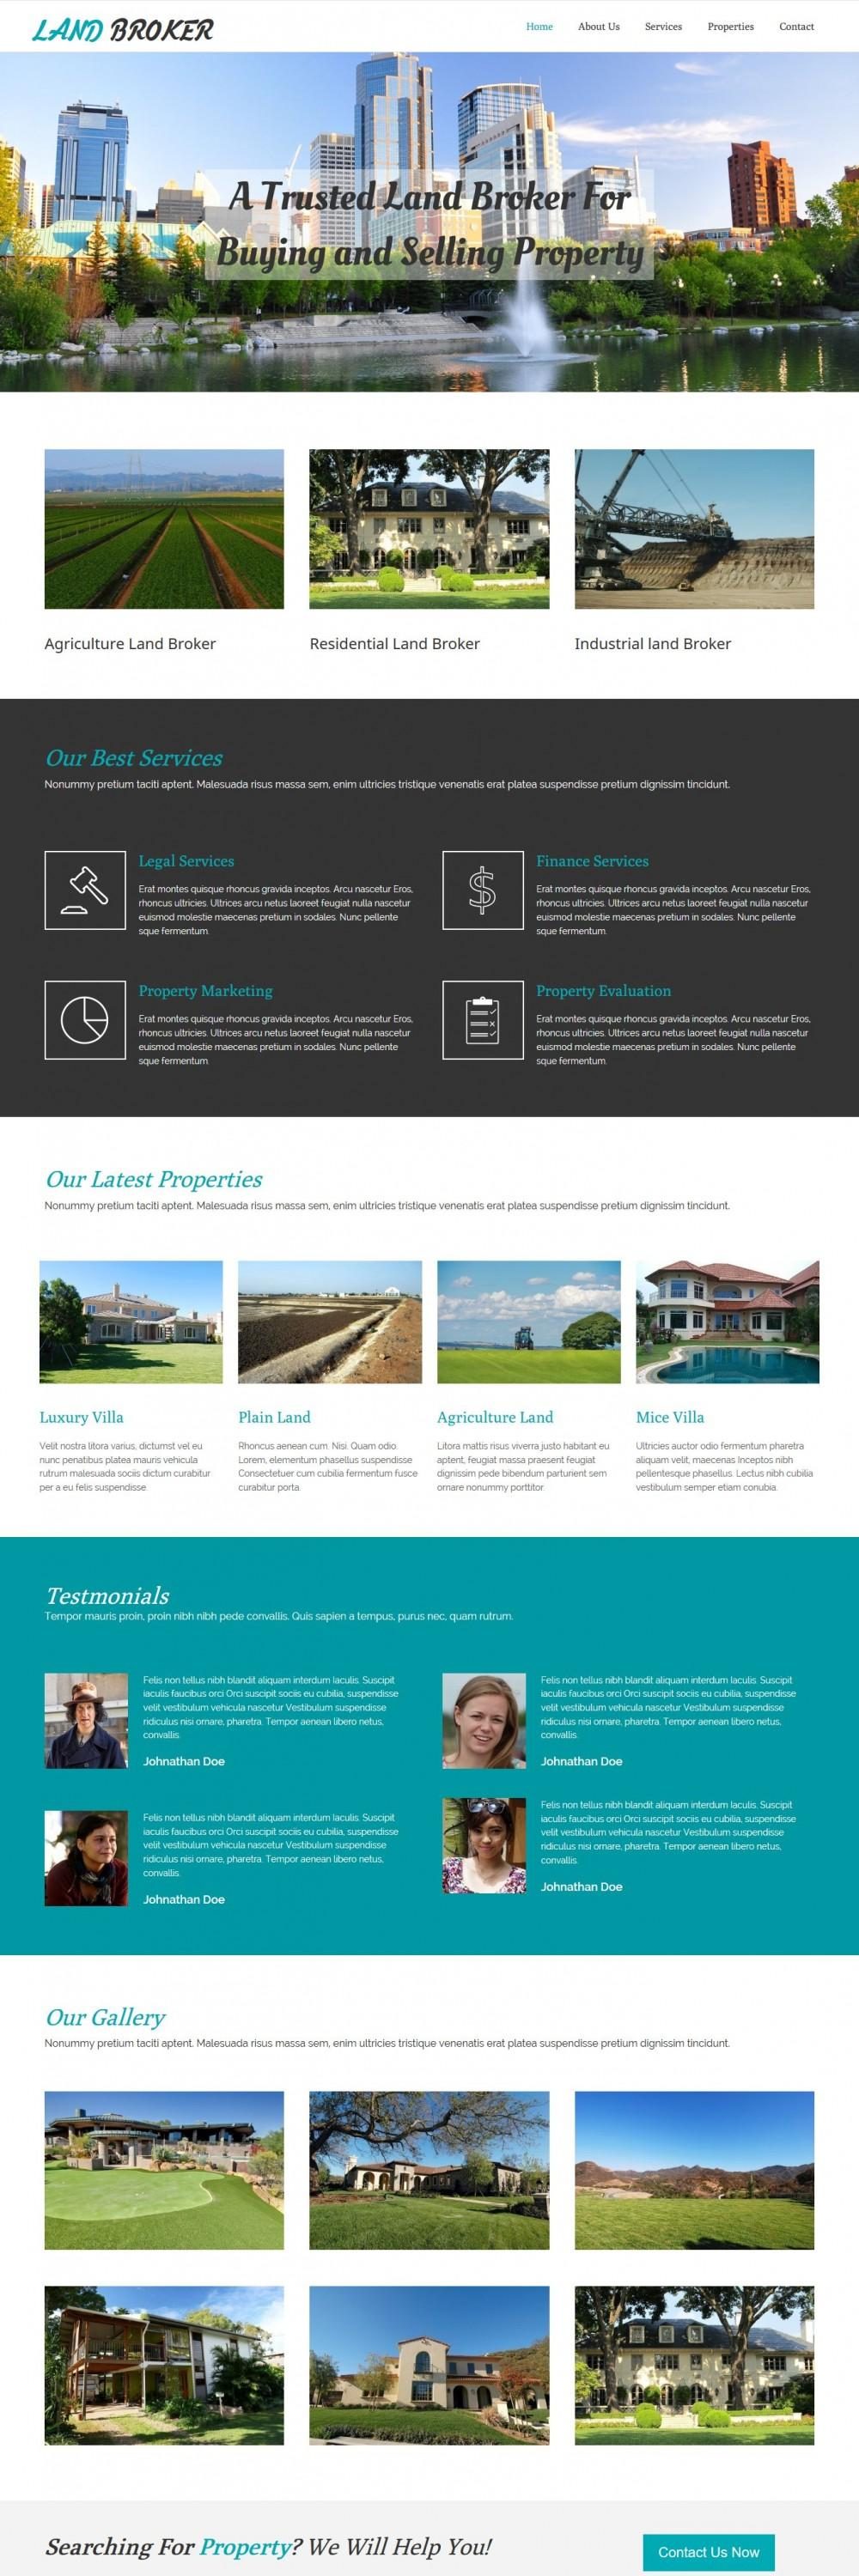 Land Broker - Real Estate/Broker Agency WordPress Theme